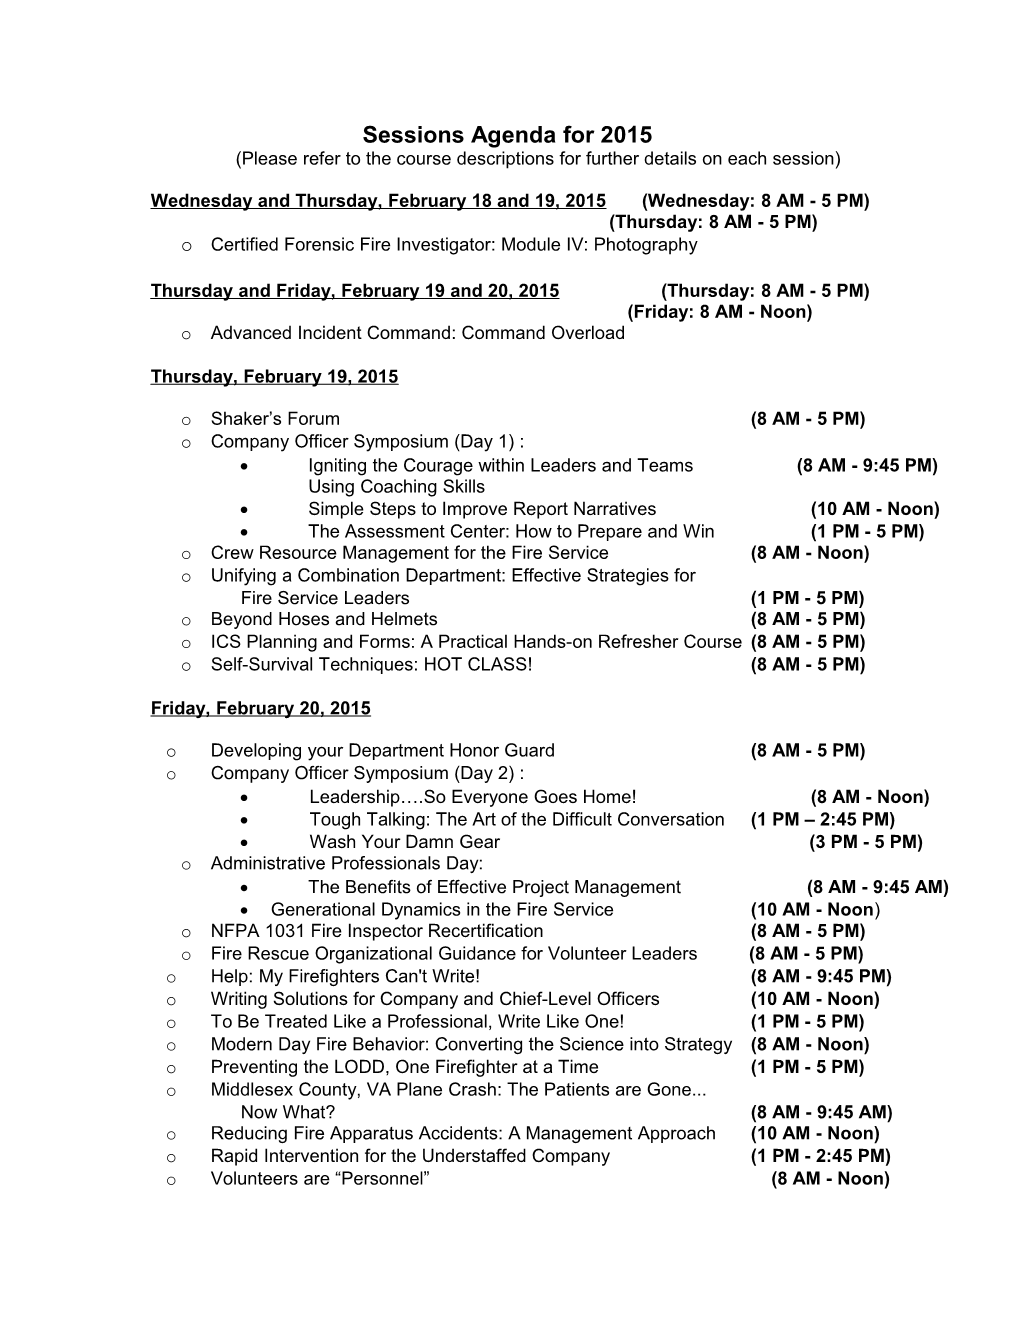 Sessions Agenda for 2010